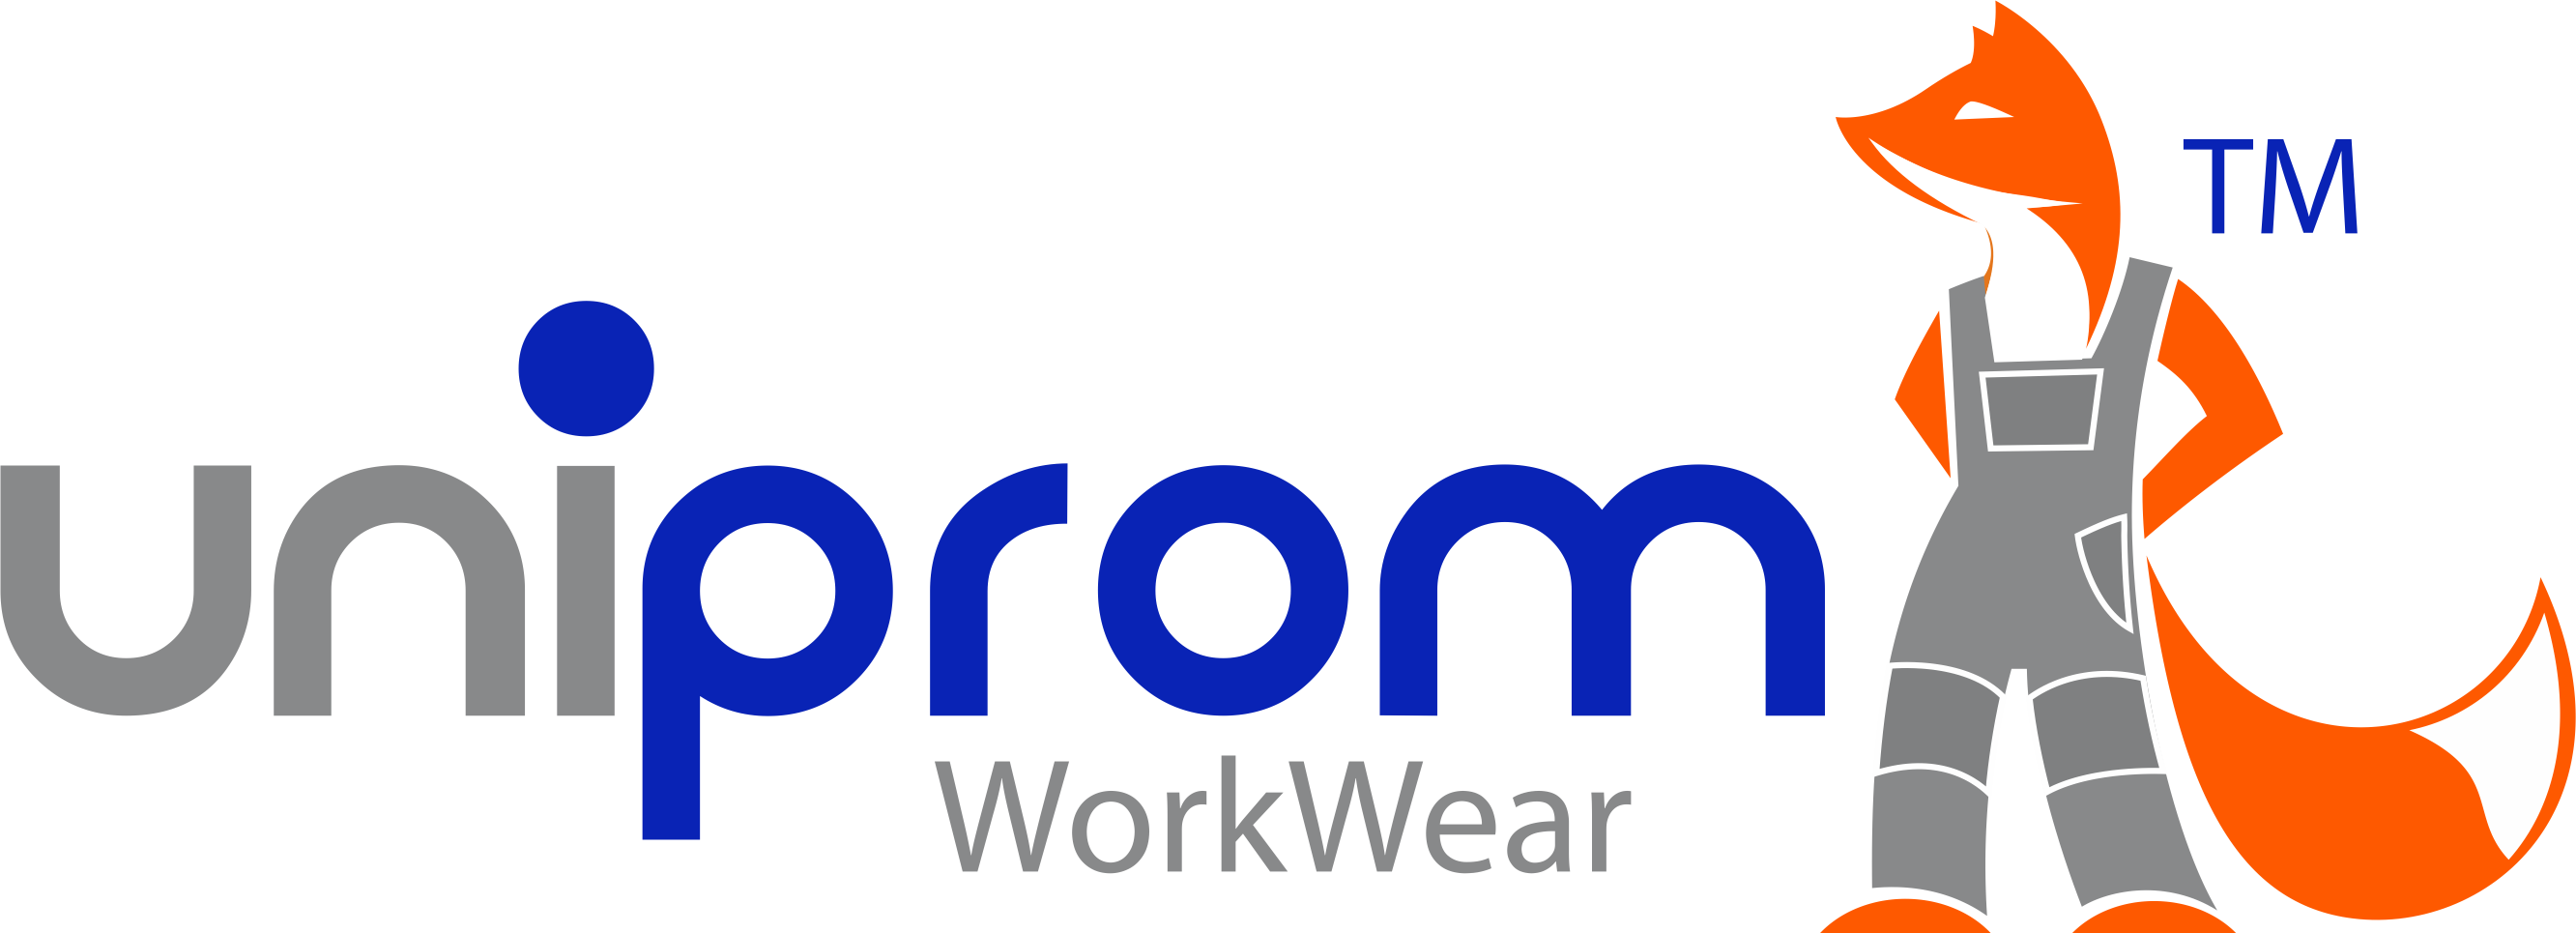 Uniprom Workwear